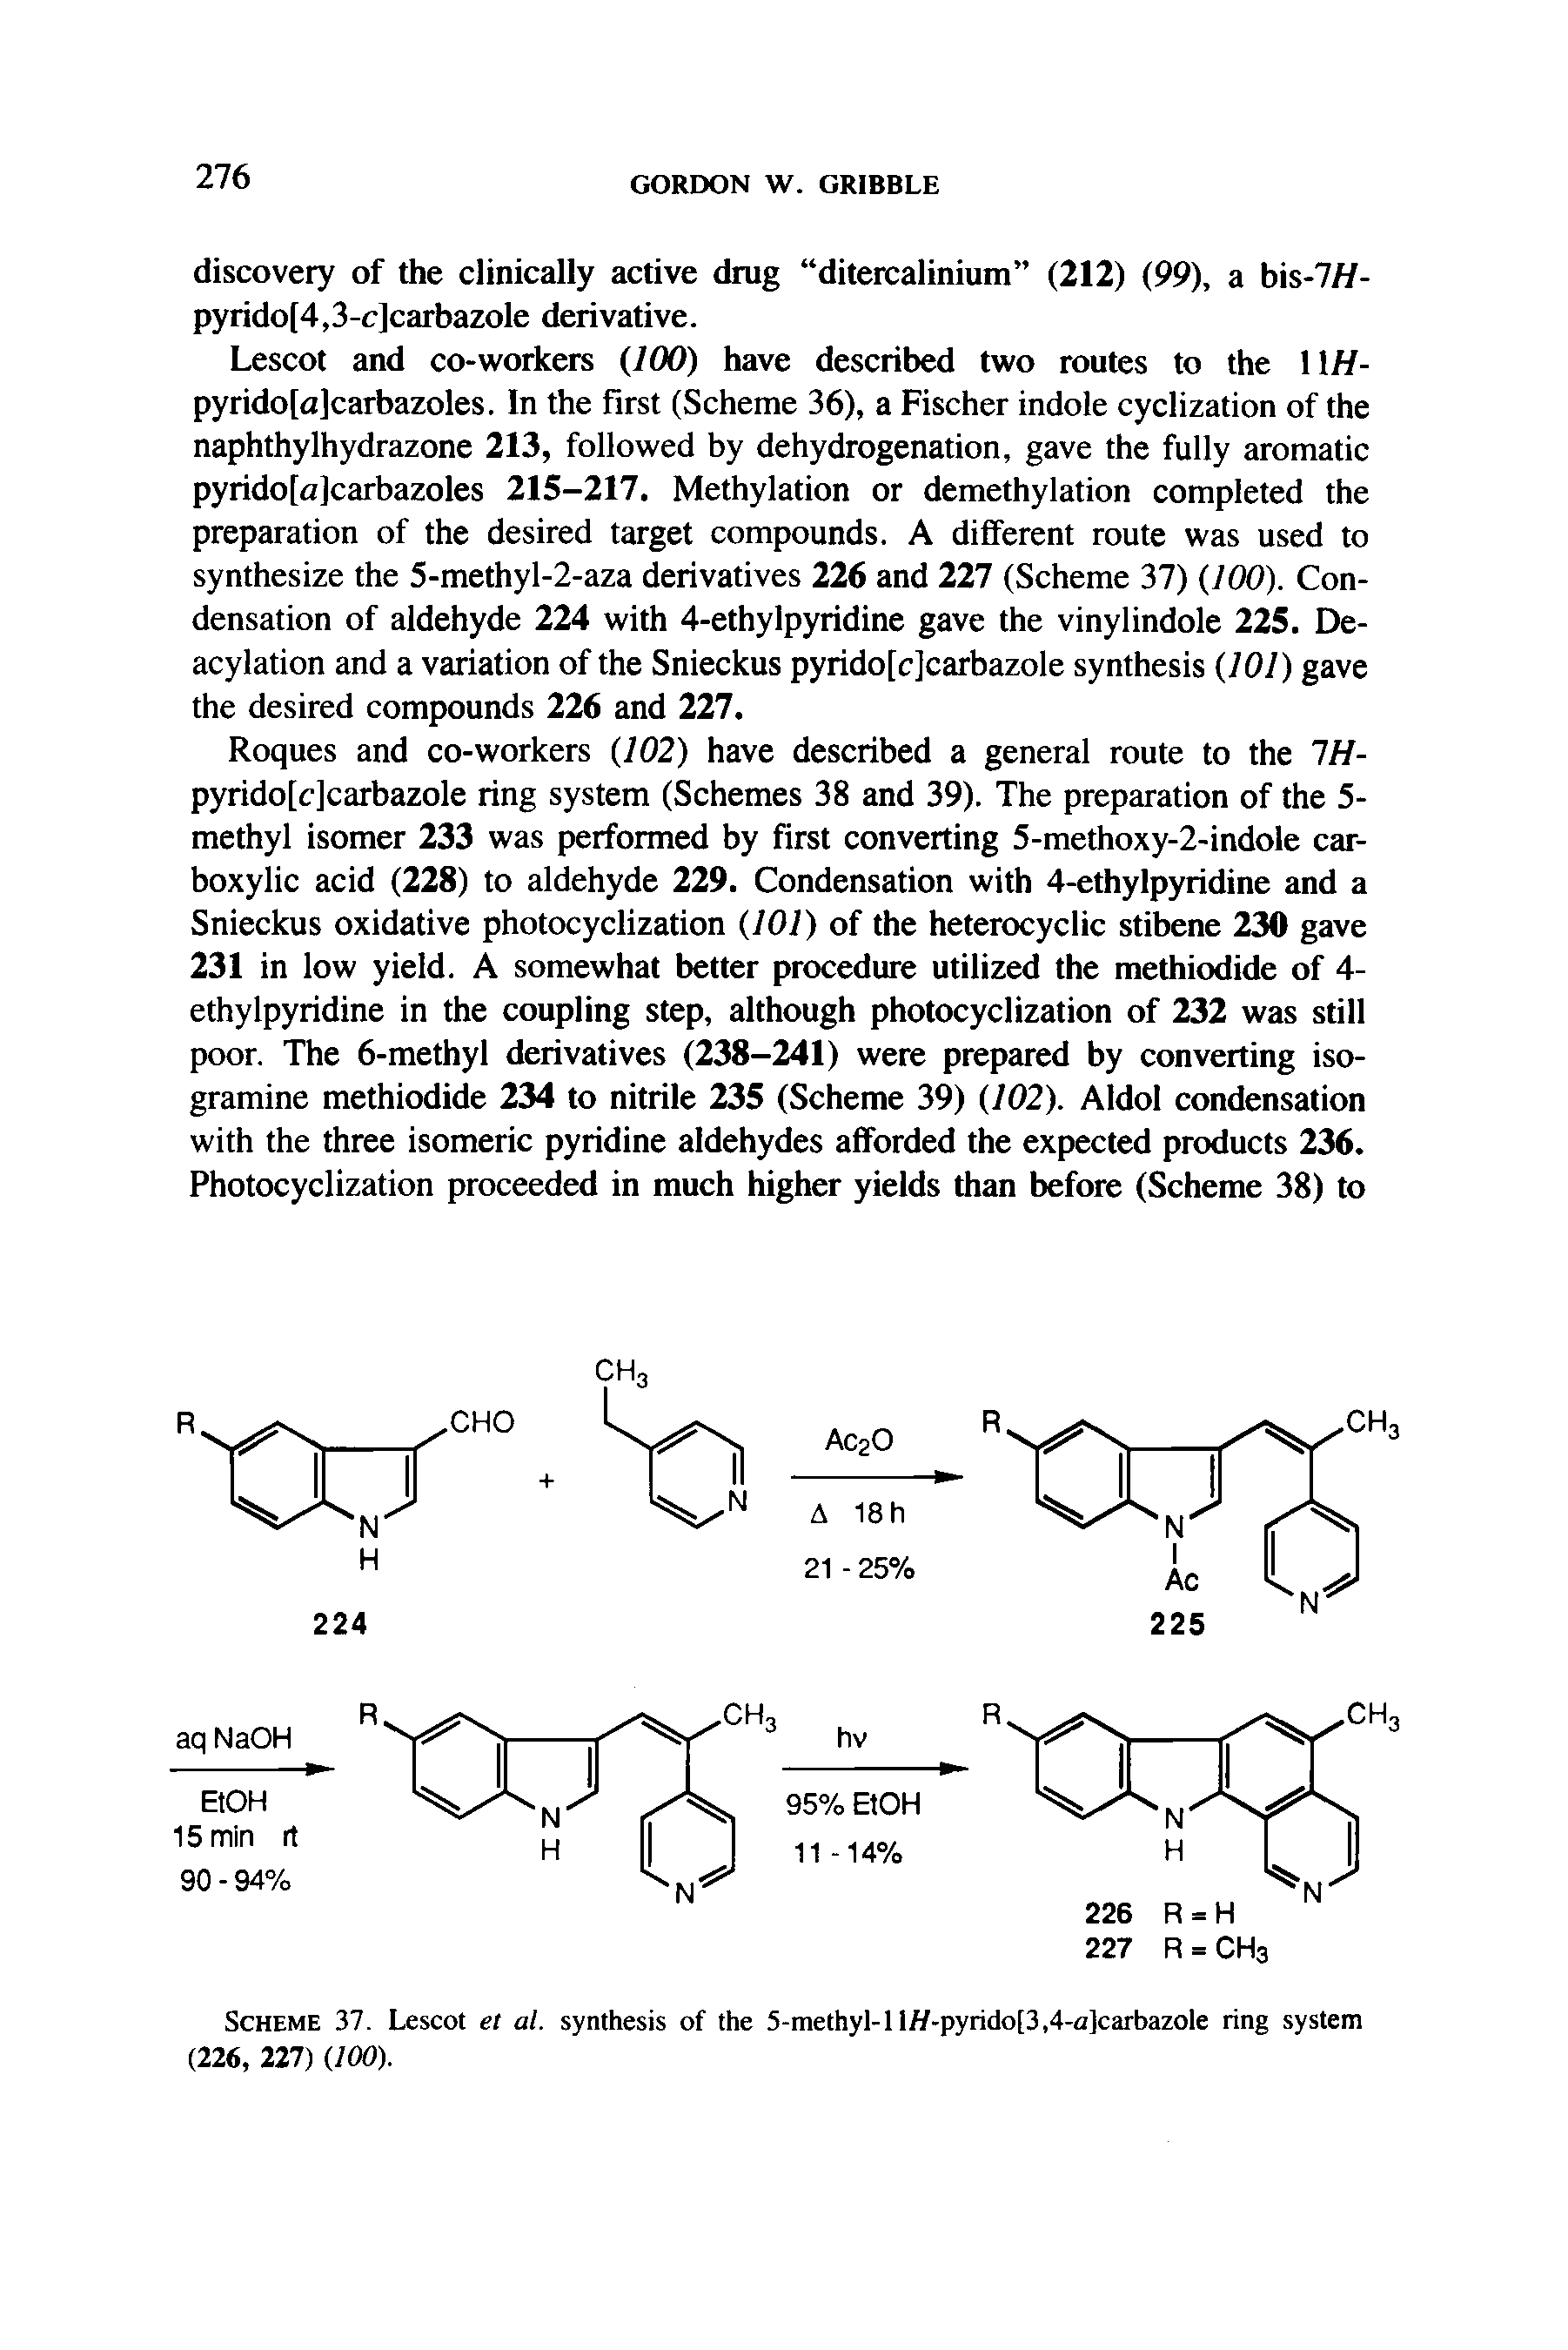 Scheme 37. Lescot et al. synthesis of the 5-methyl-1 l//-pyrido[3,4-a]carbazole ring system (226, 111) (700).